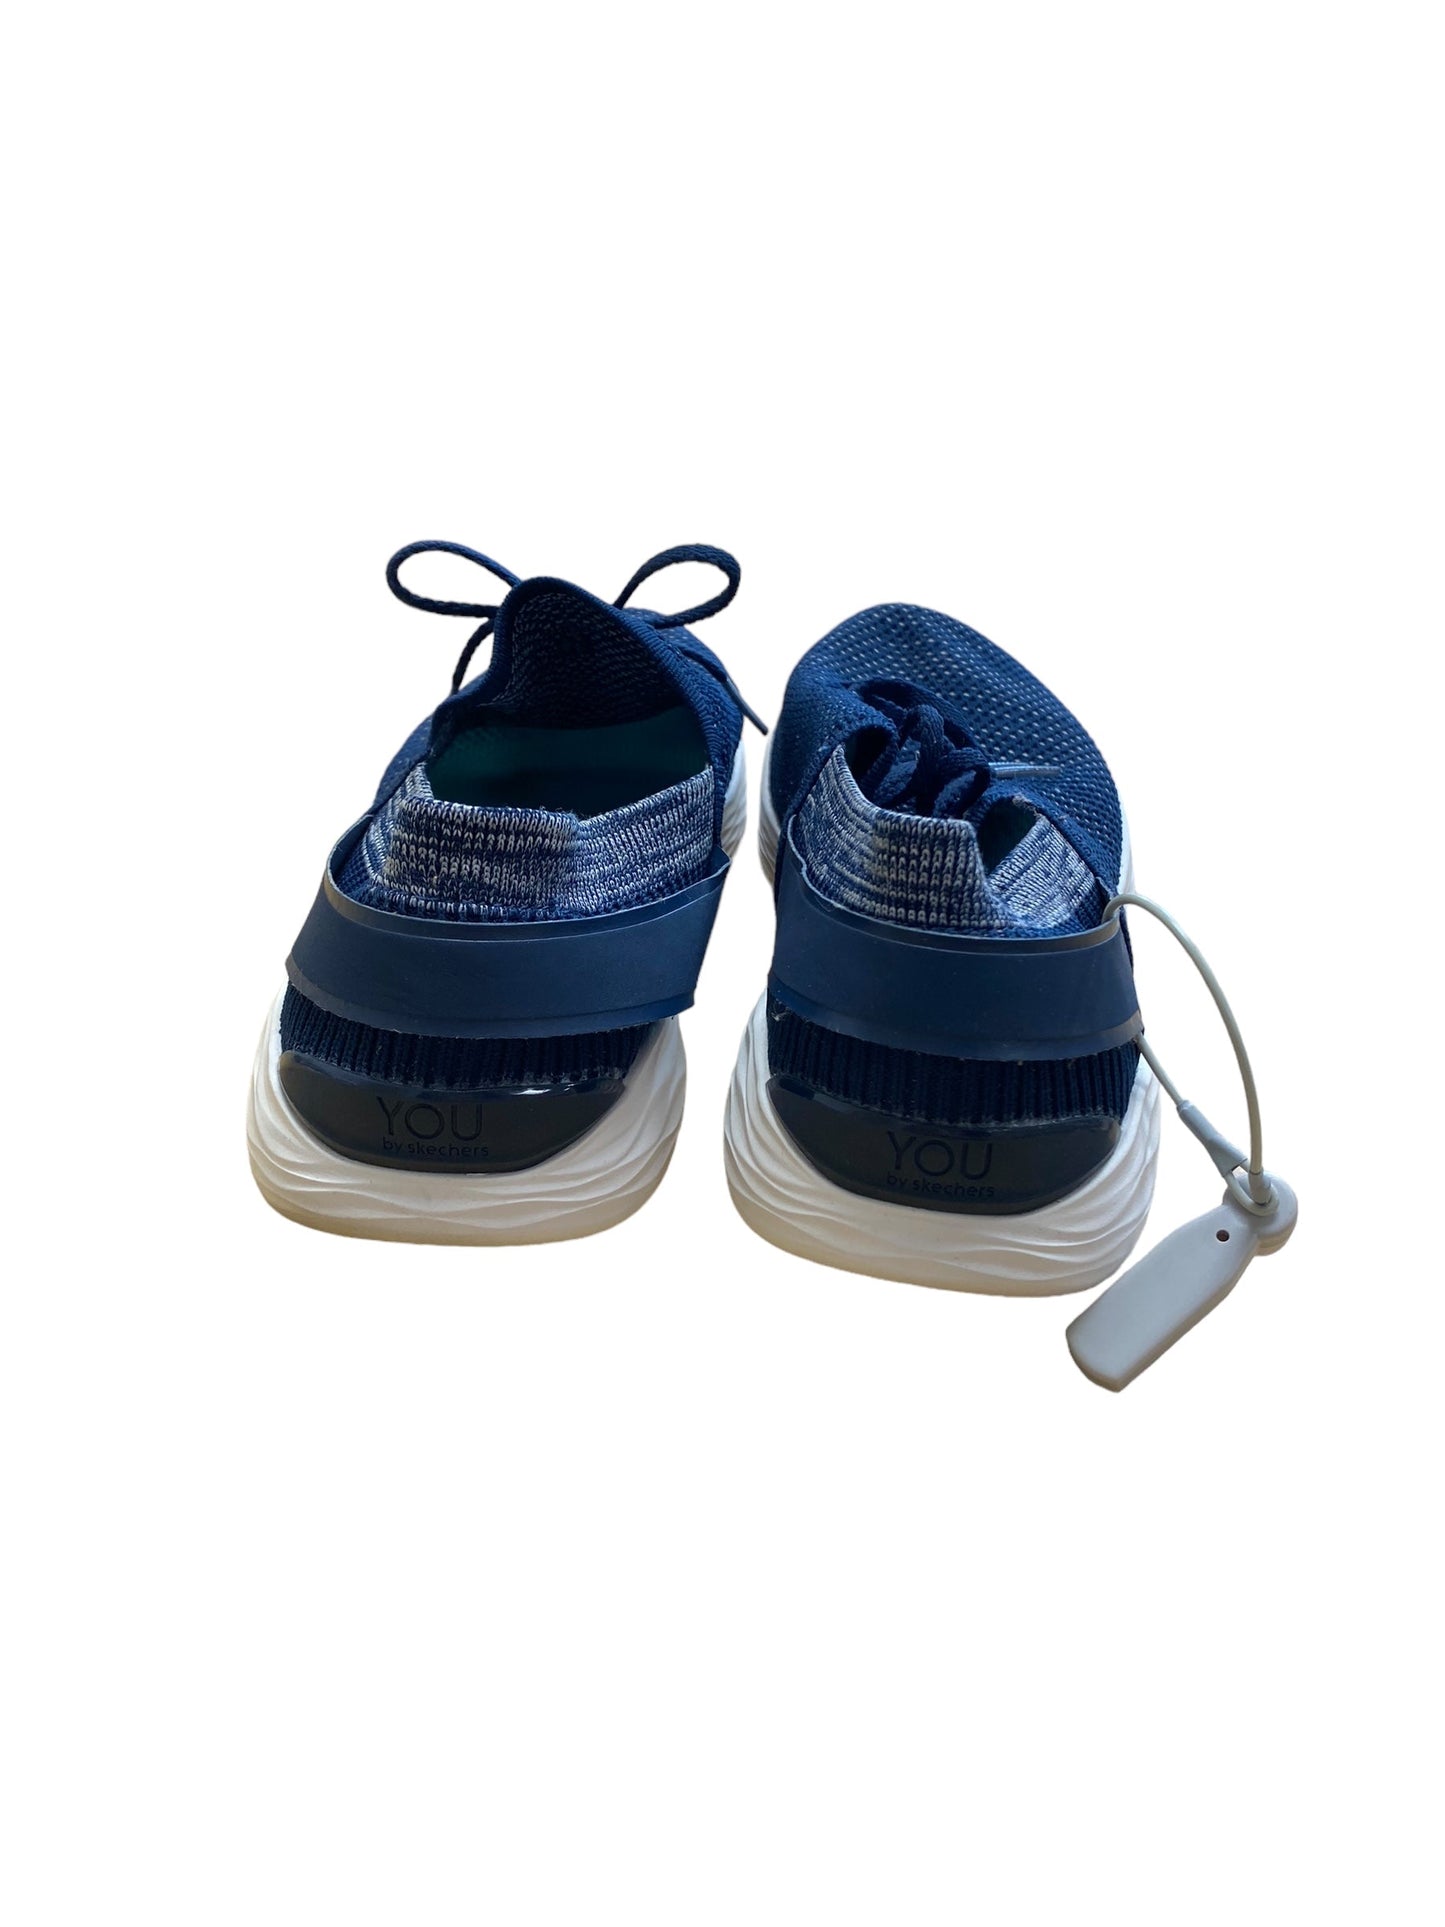 Blue Shoes Athletic Skechers, Size 7